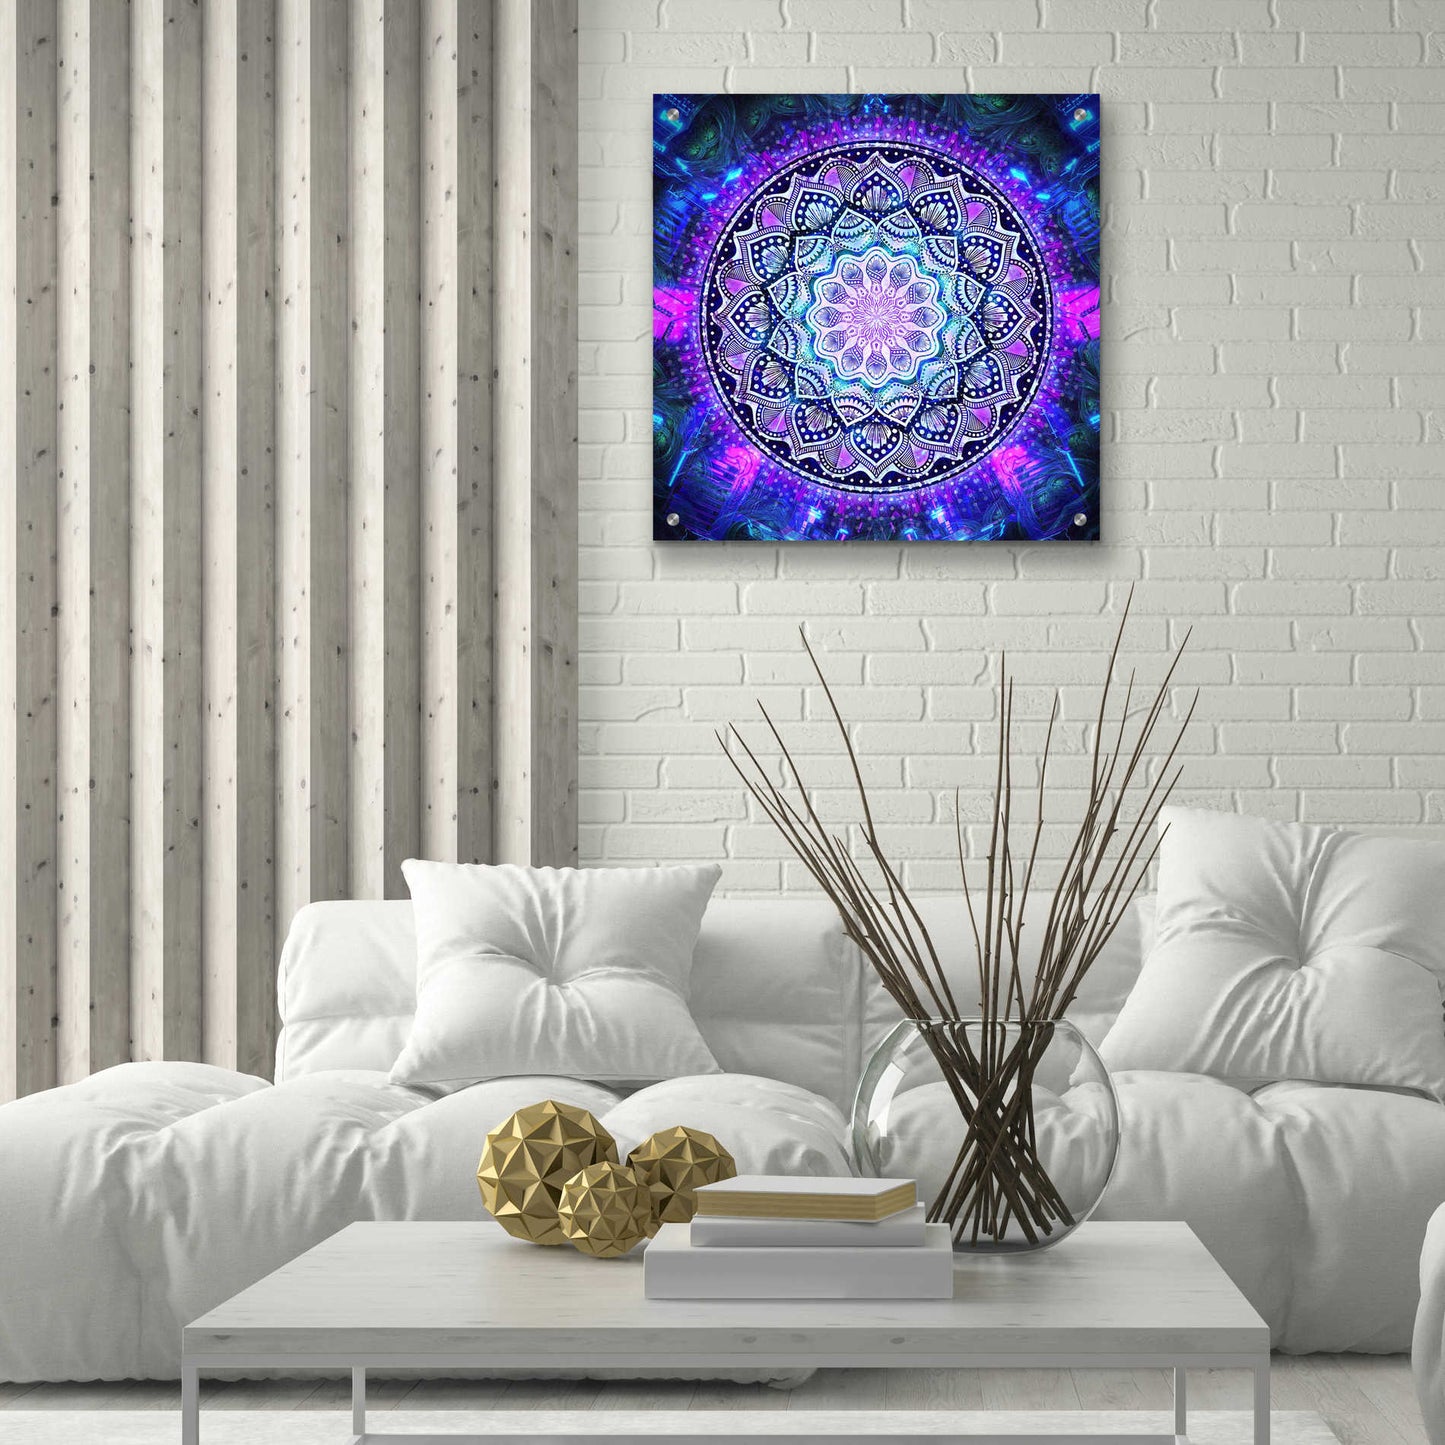 Epic Art 'Sacred Bloom Mandala' by Cameron Gray Acrylic Glass Wall Art,24x24